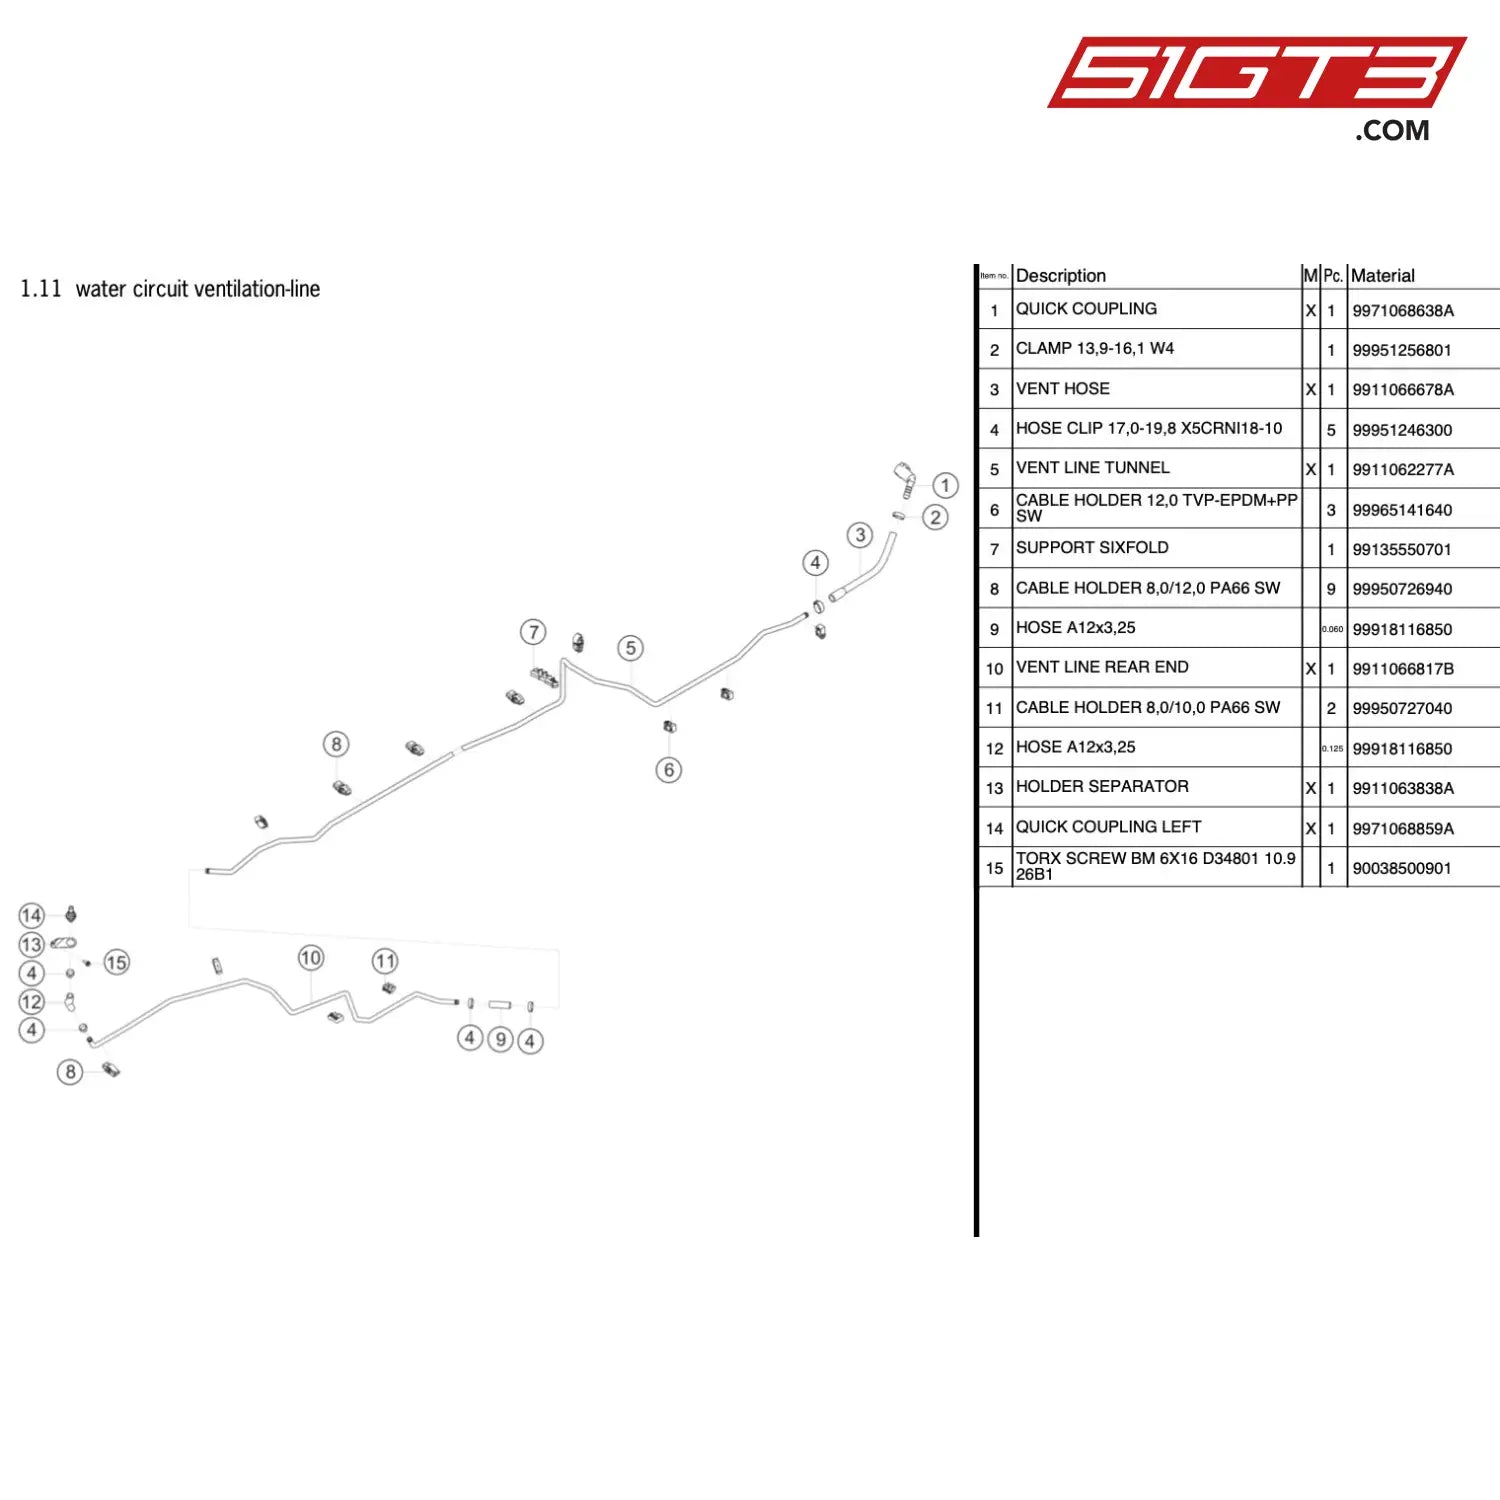 Support Sixfold - 99135550701 [Porsche 911 Gt3 R Type 991 (Gen 1)] Water Circuit Ventilation-Line